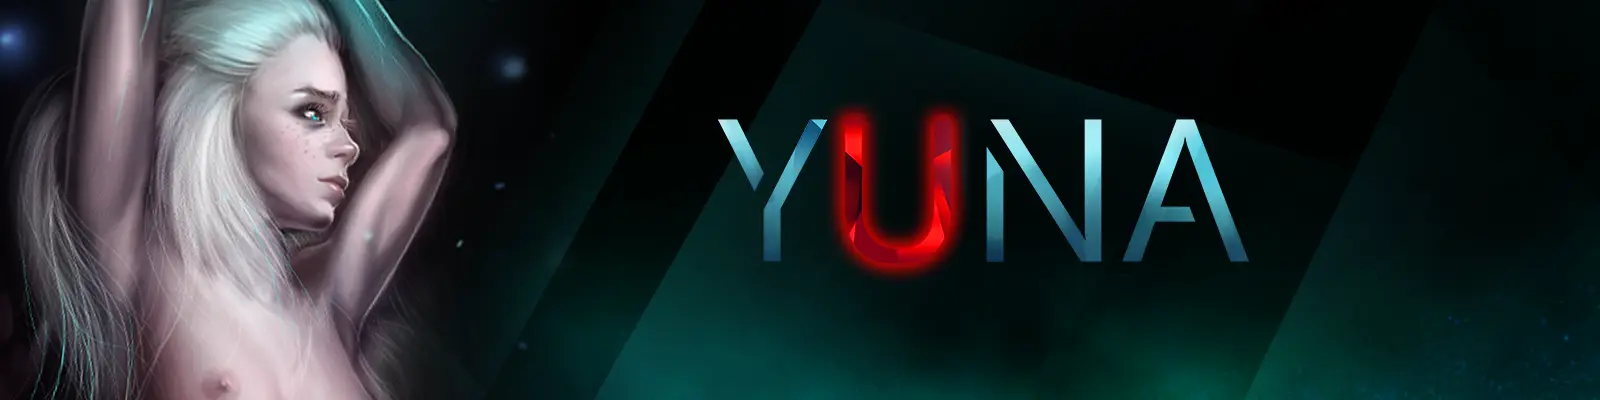 Yuna: Reborn + Arena[Tech Demo] main image